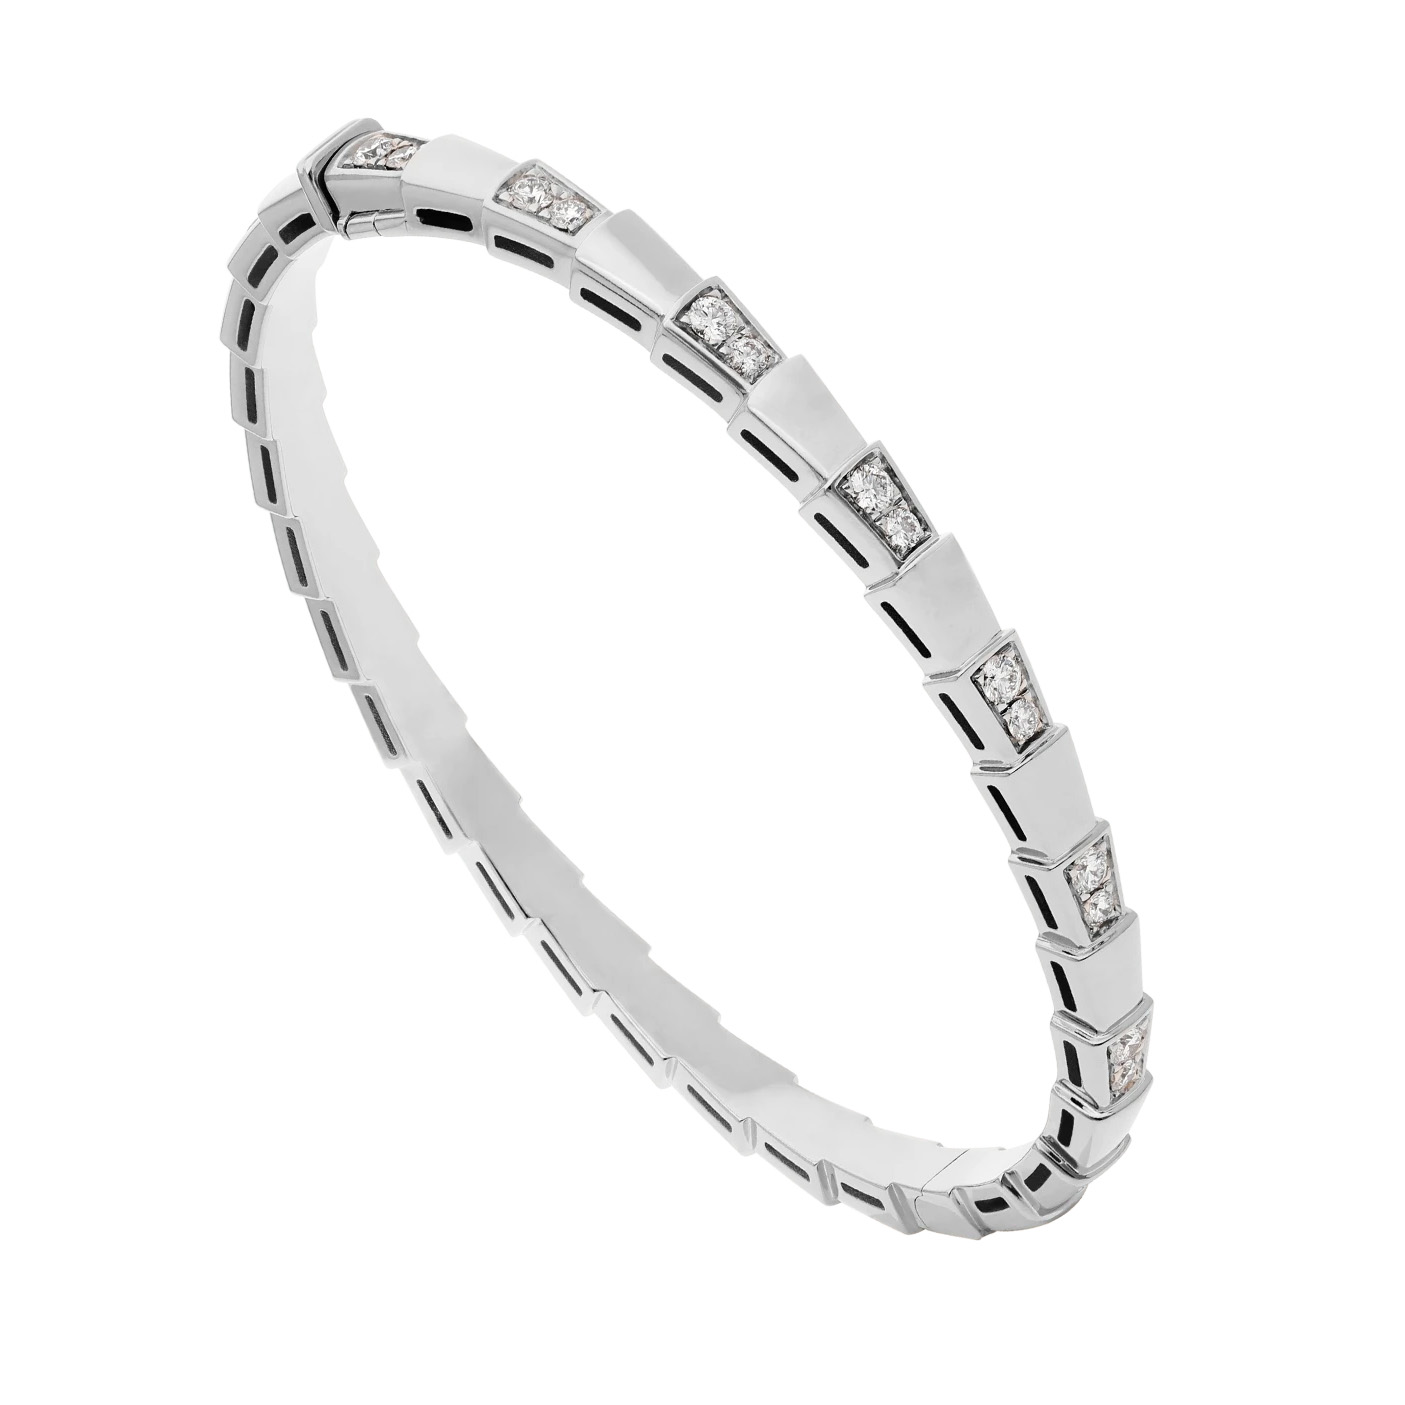 Wholesale OEM made design 18K white OEM/ODM Jewelry gold bracelet set with demi-pavé diamonds custom jewelry manufacturers china